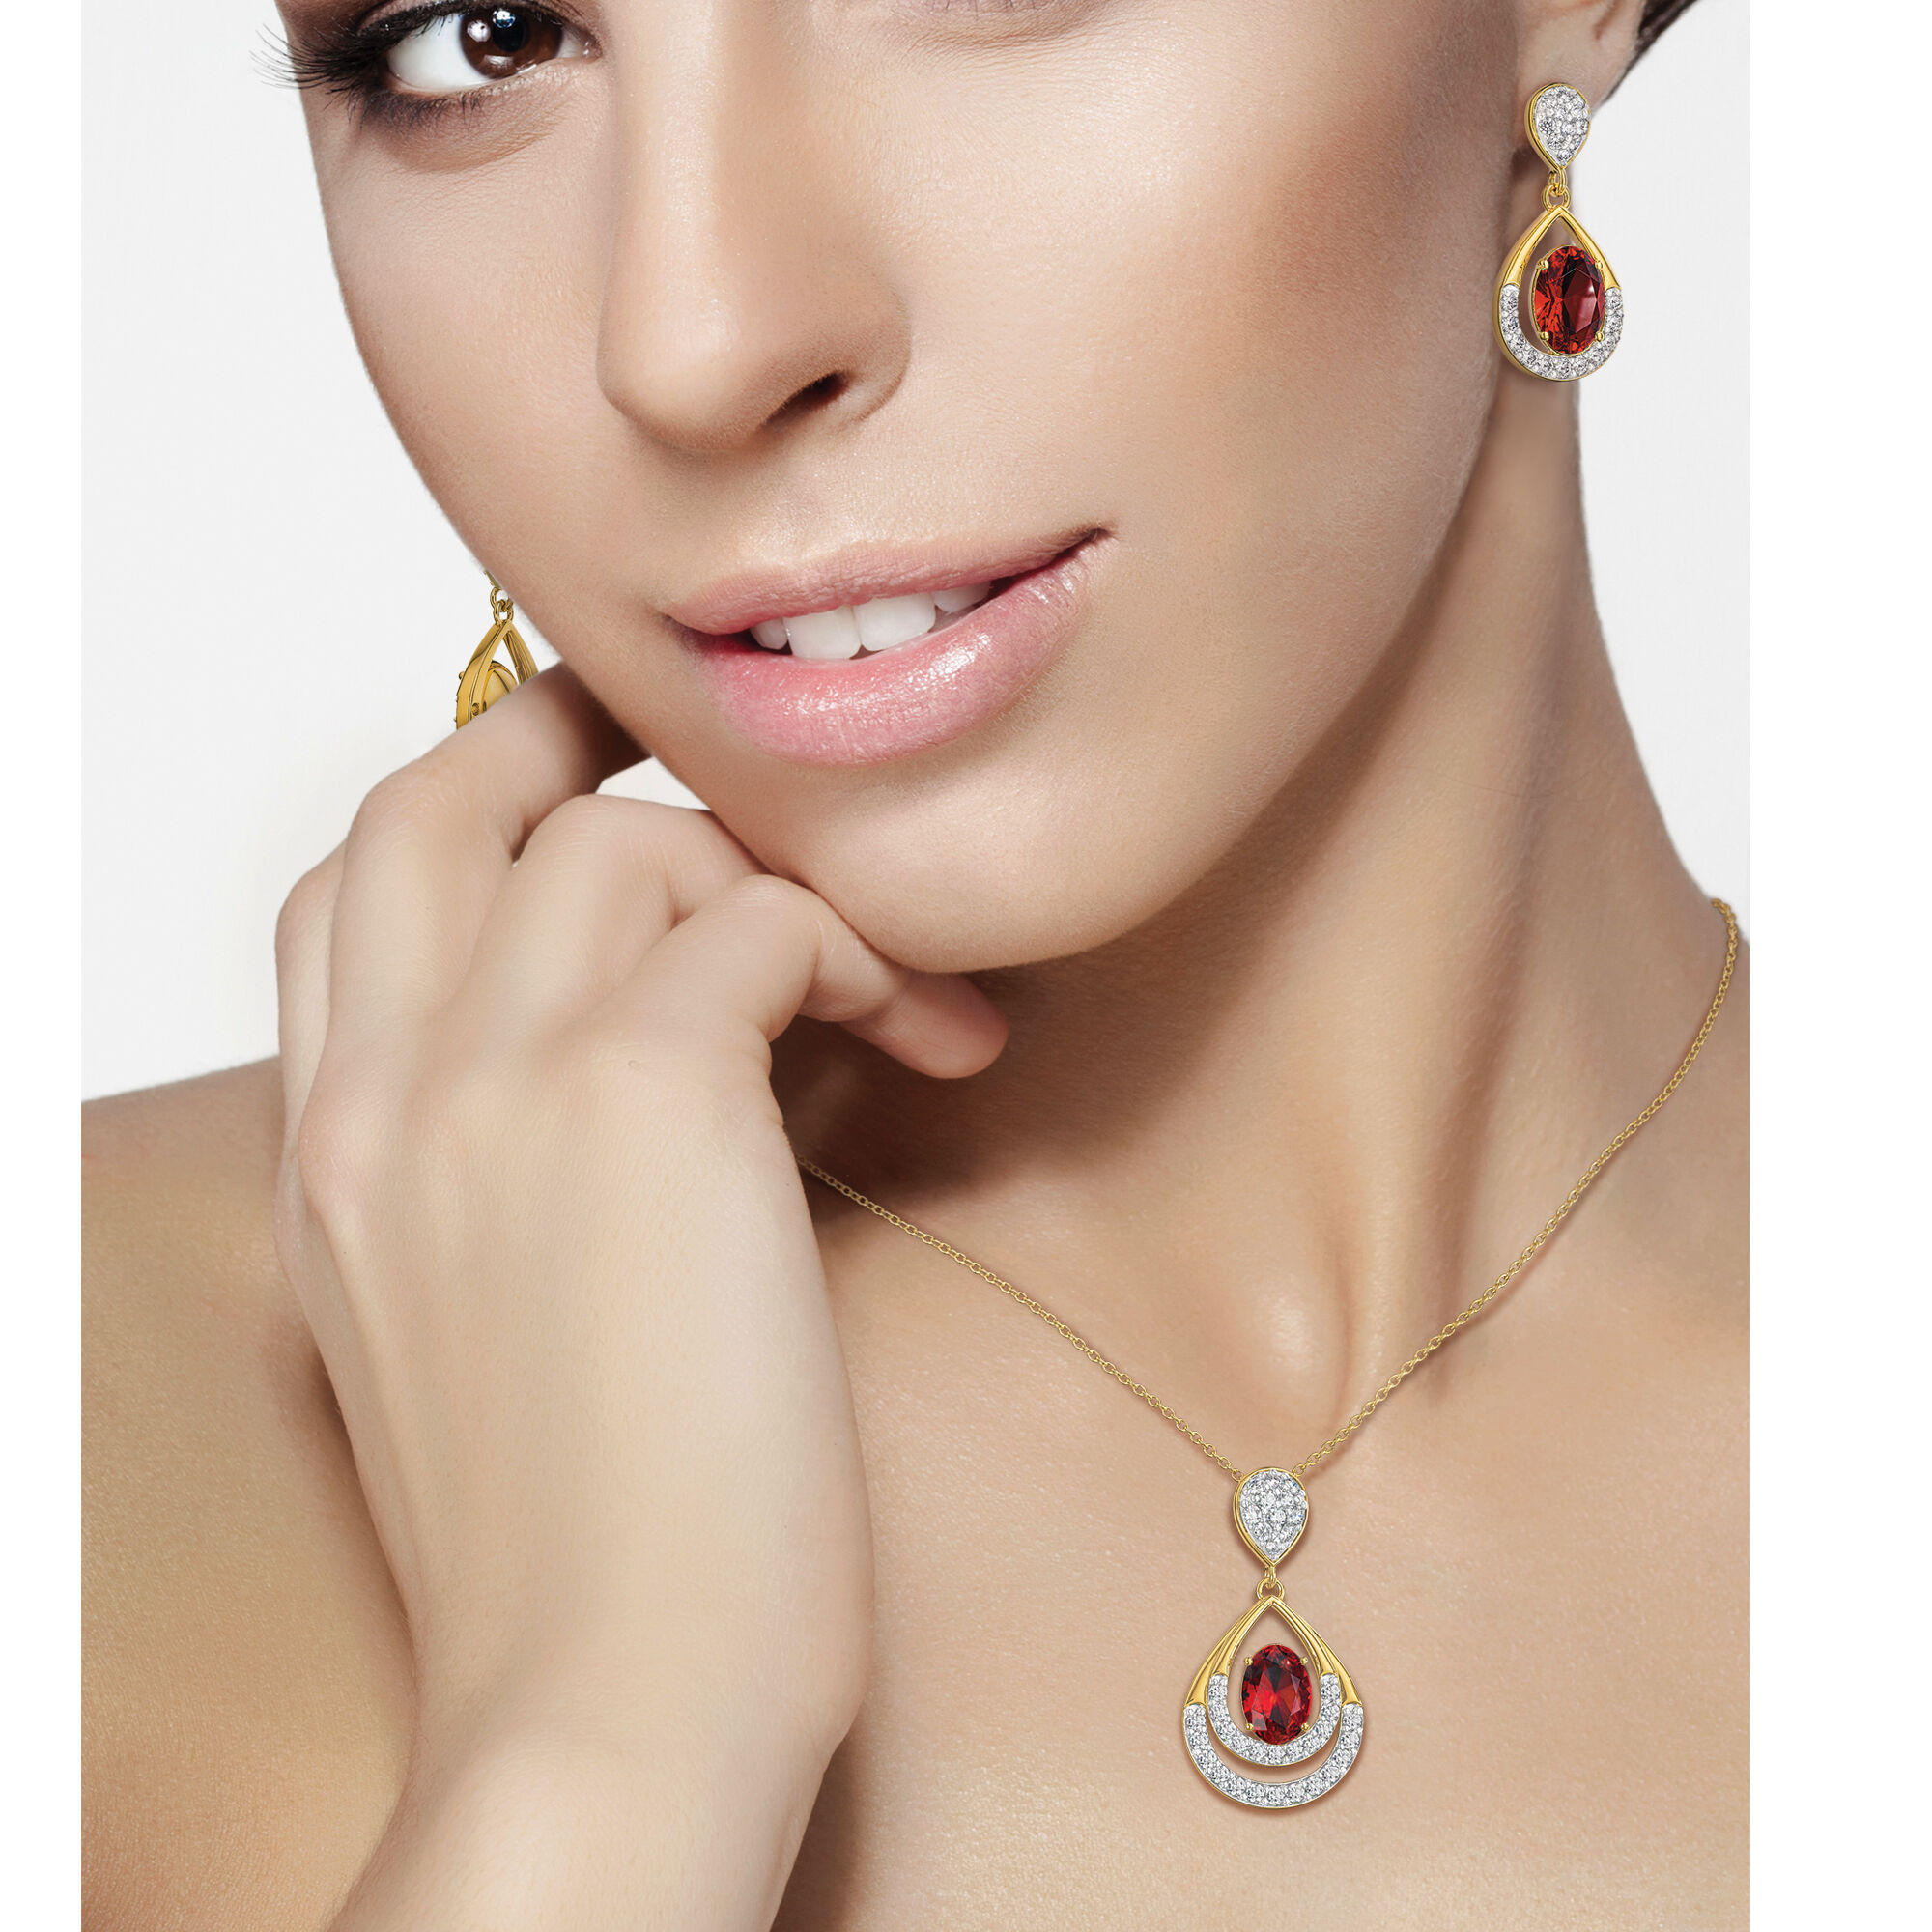 Birthstone Necklace Earring Set 6930 0010 n model